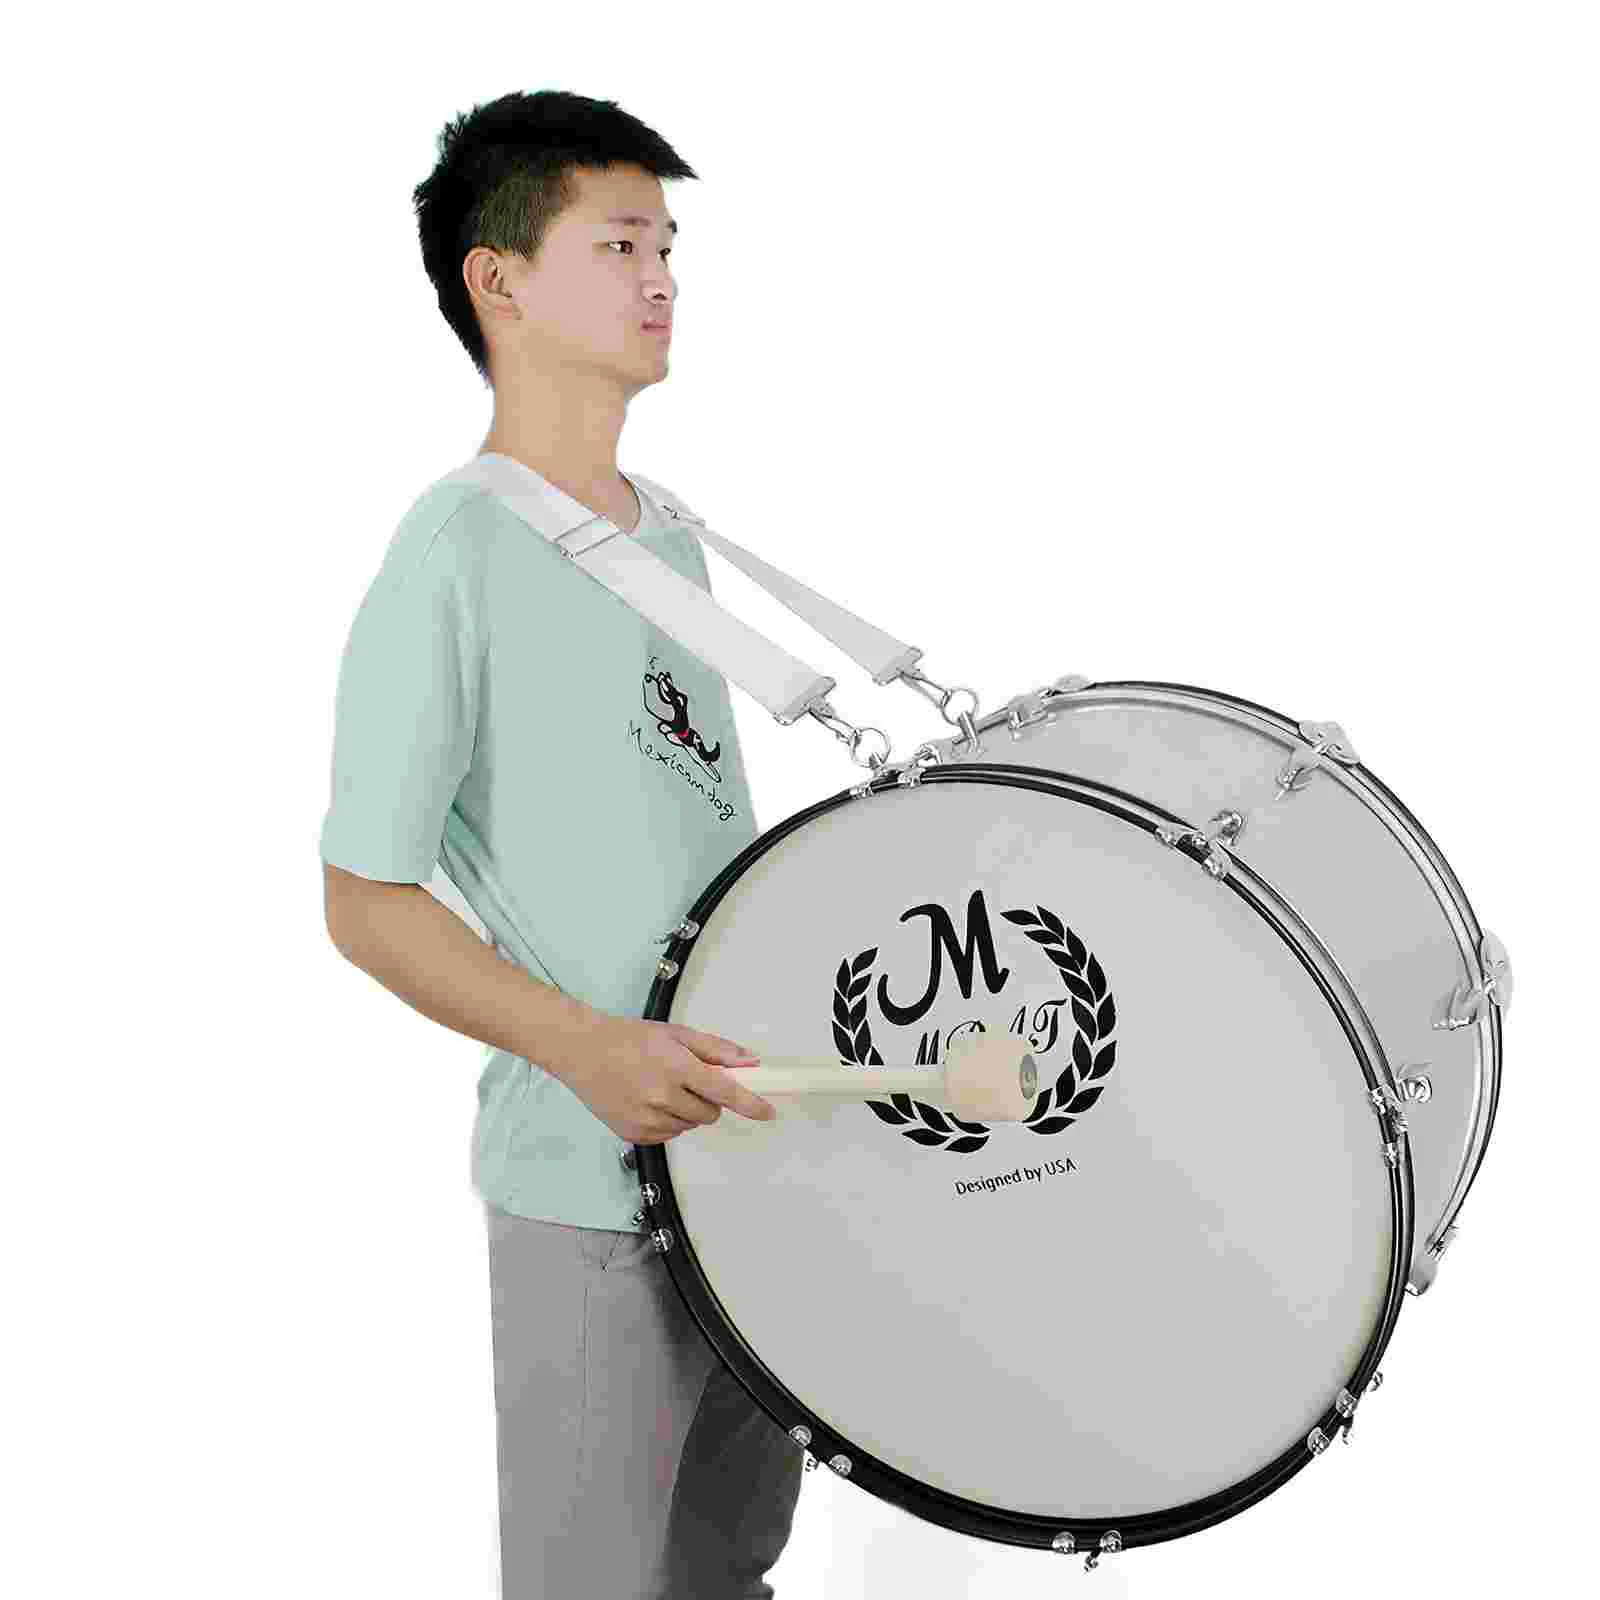 Шагать барабан. Бас барабан. Большой барабан на ремне. Большие барабаны. Большой барабан музыкальный инструмент.